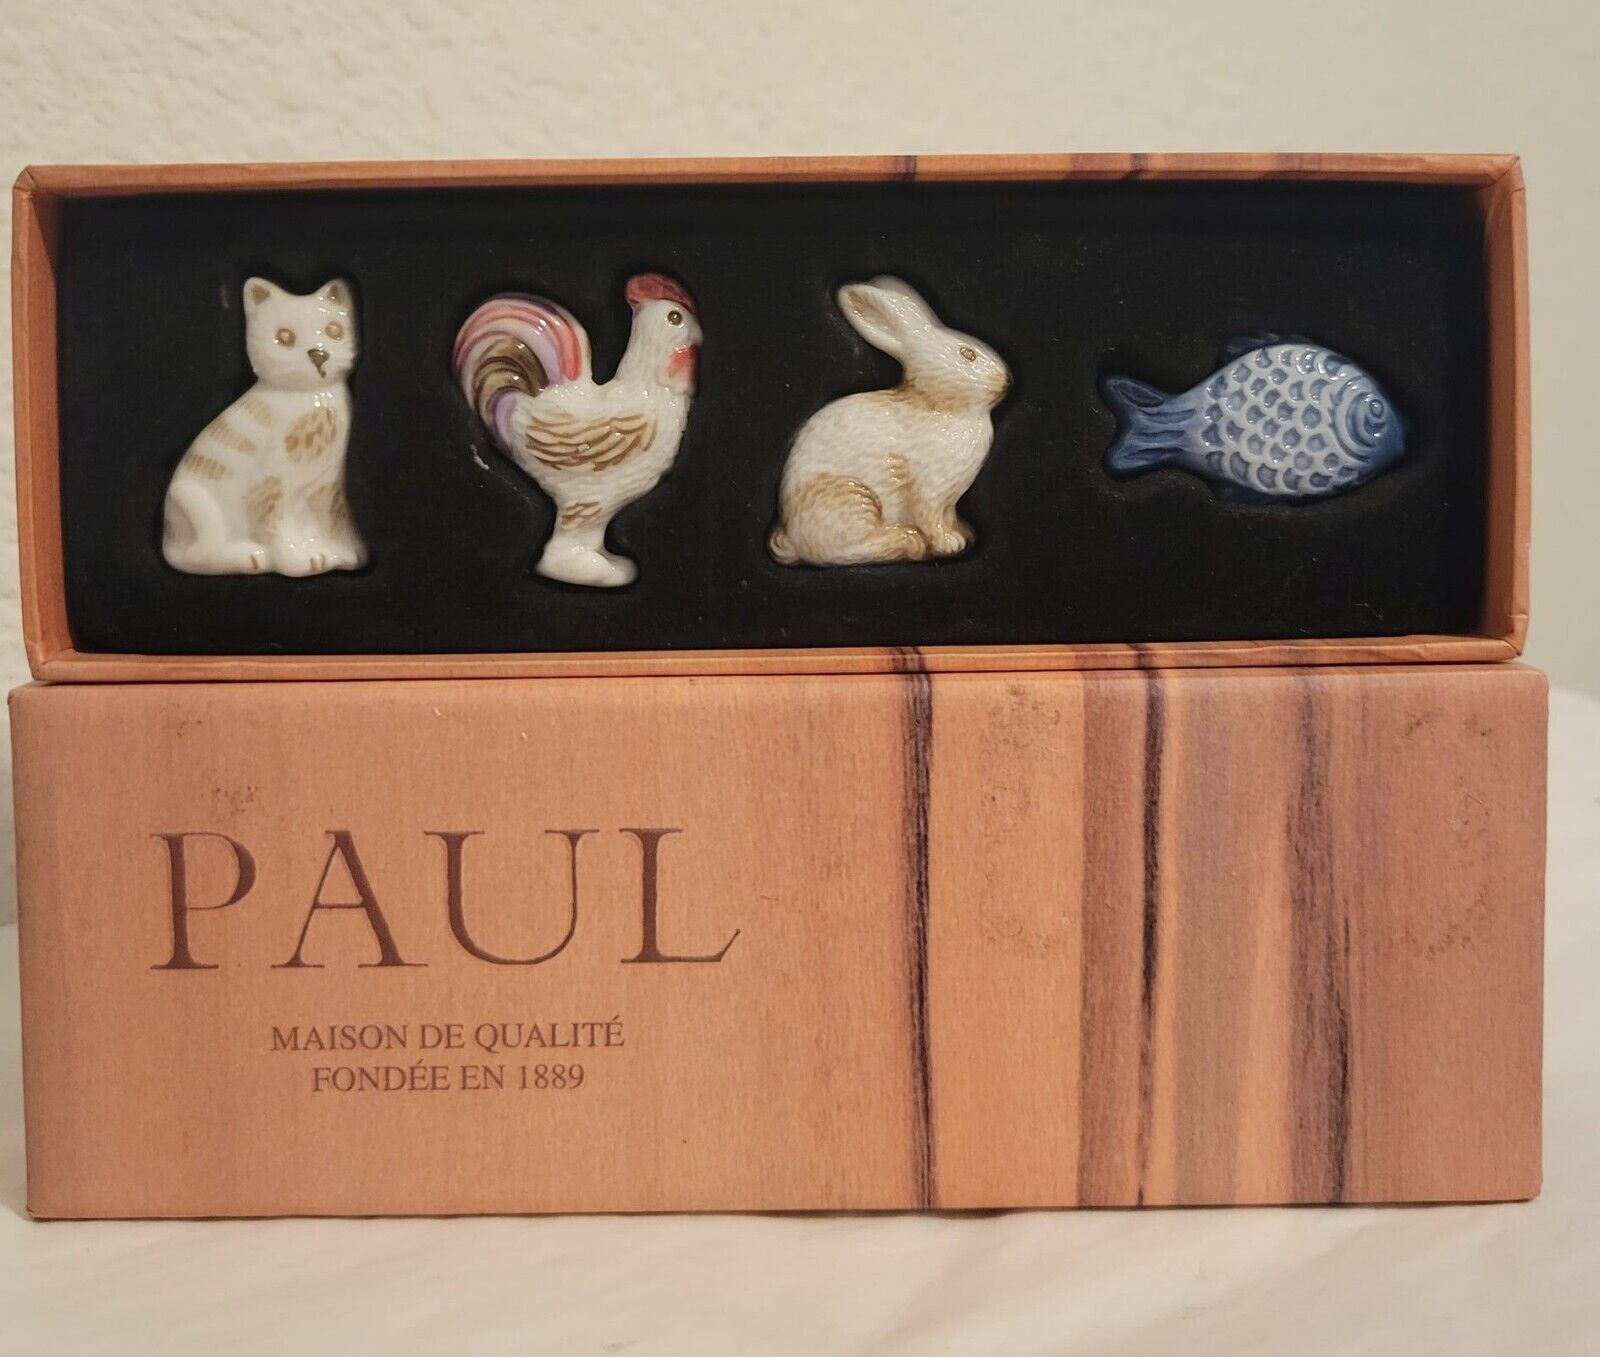 Set of 4 paul maison de qualite fondee en 1889 miniature figurines 